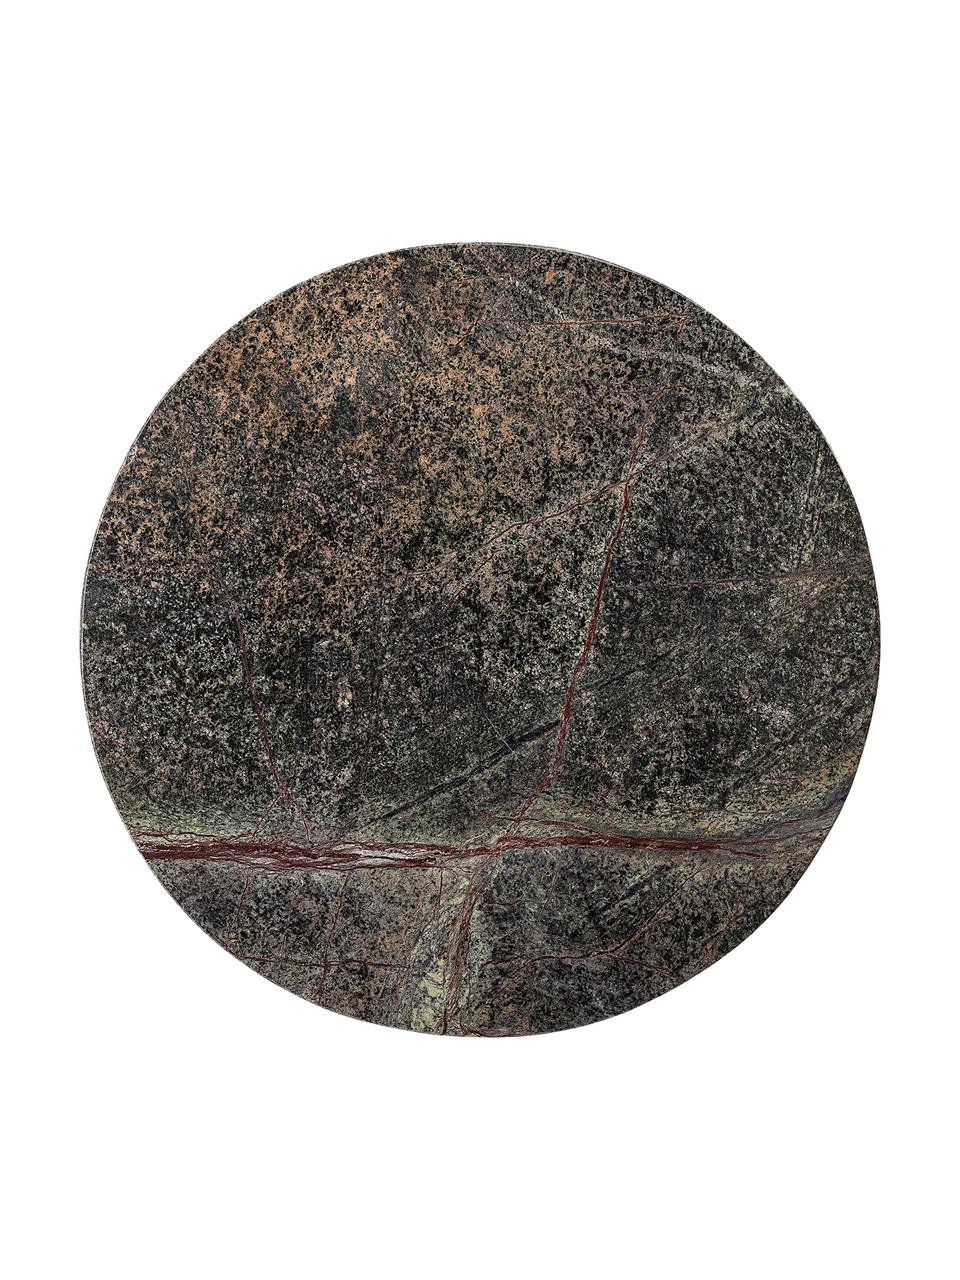 Serveerplateau Lime, Kalksteen, Donkergroen, Ø 30 cm